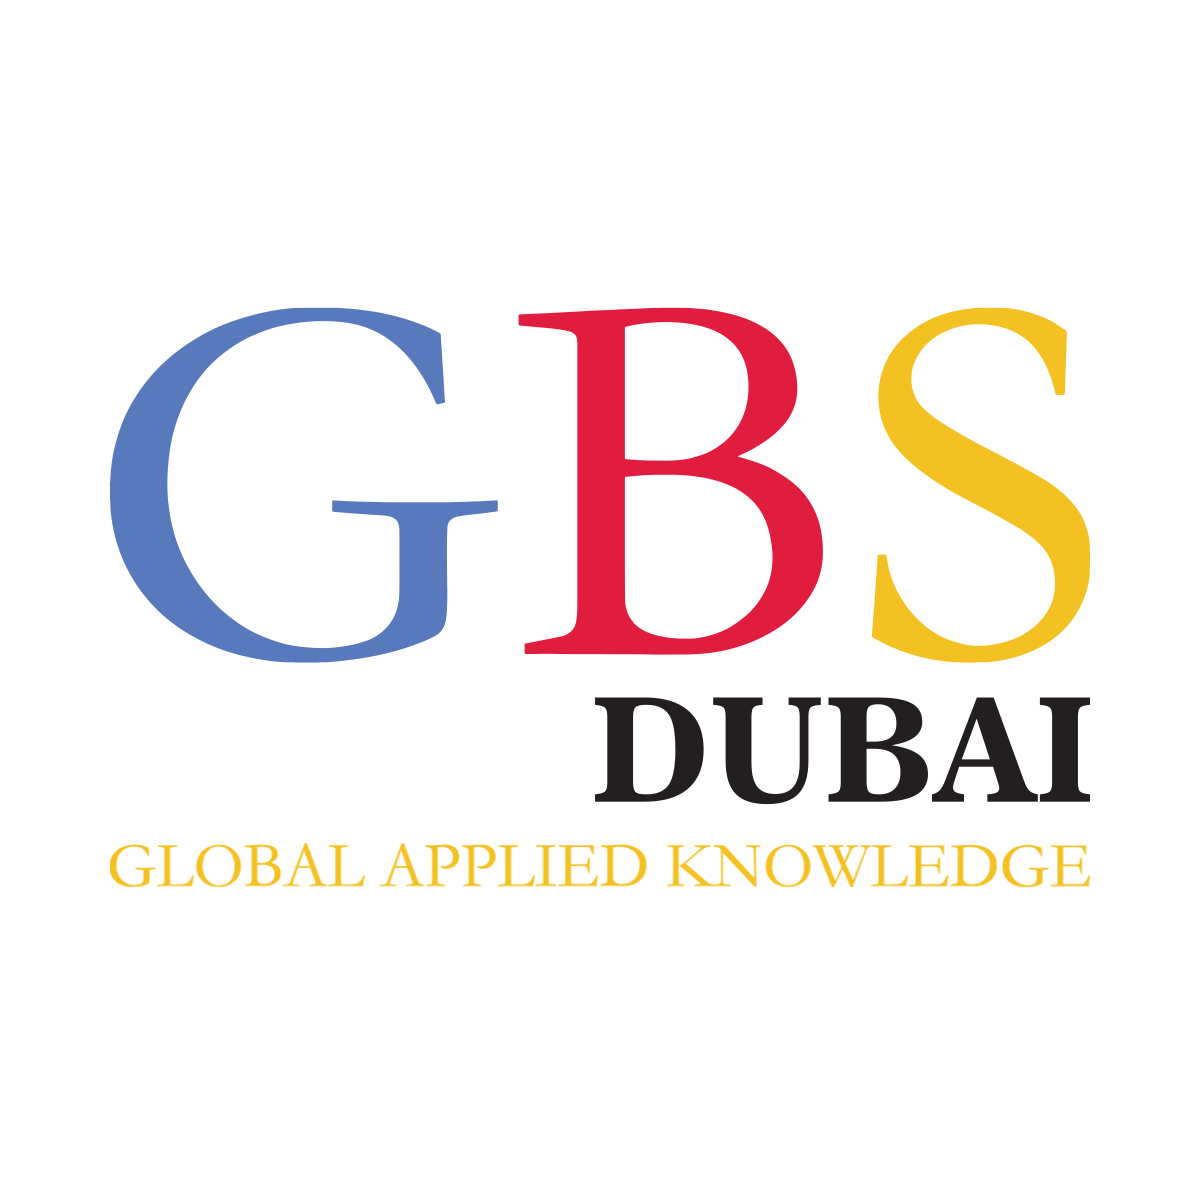 GBS Dubai